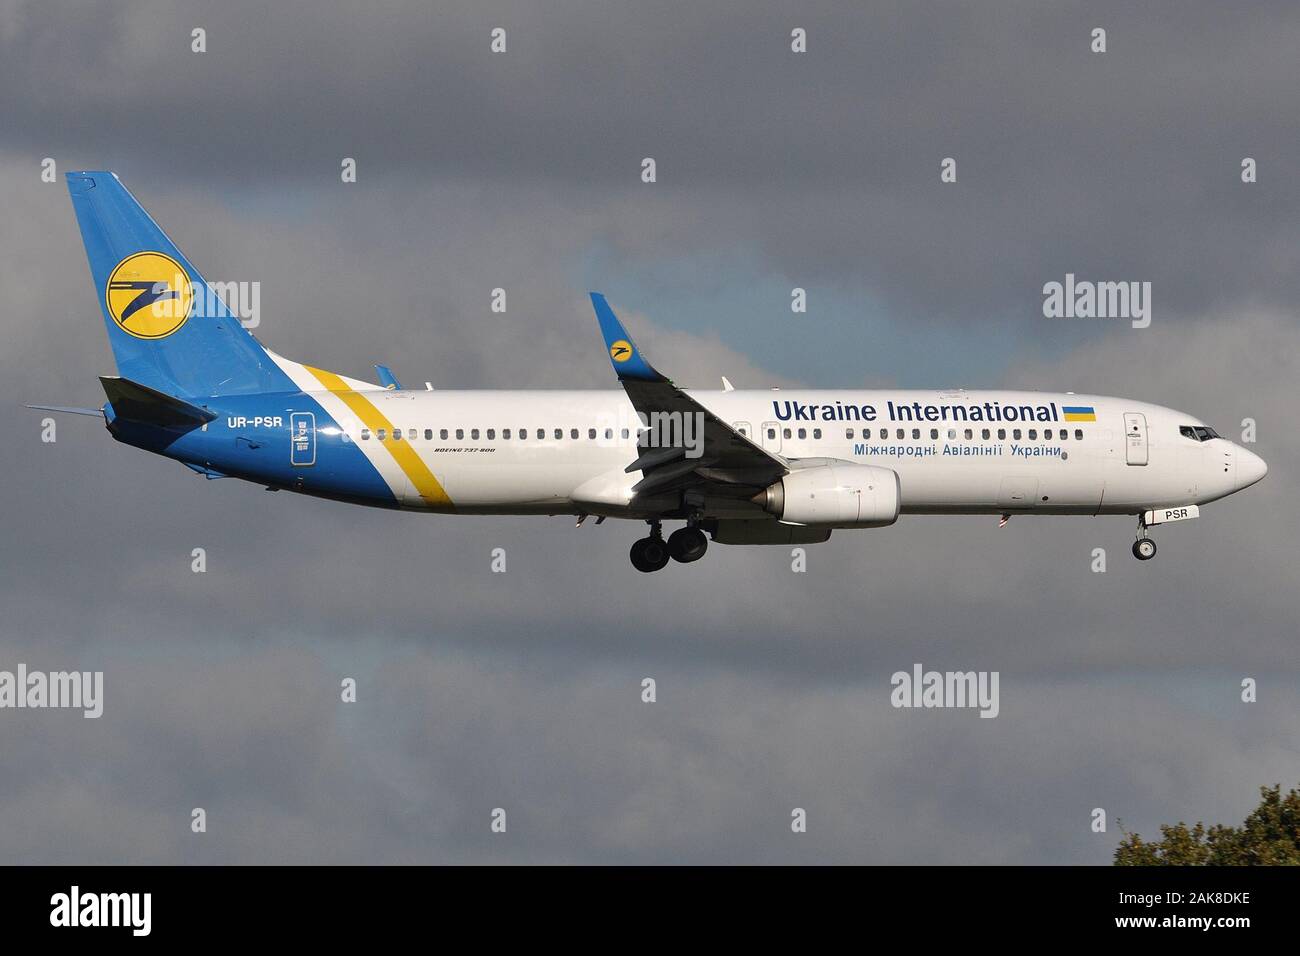 UKRAINE INTERNATIONAL AIRLINES BOEING 737-800(W) CRASHES AT TEHRAN. Stock Photo